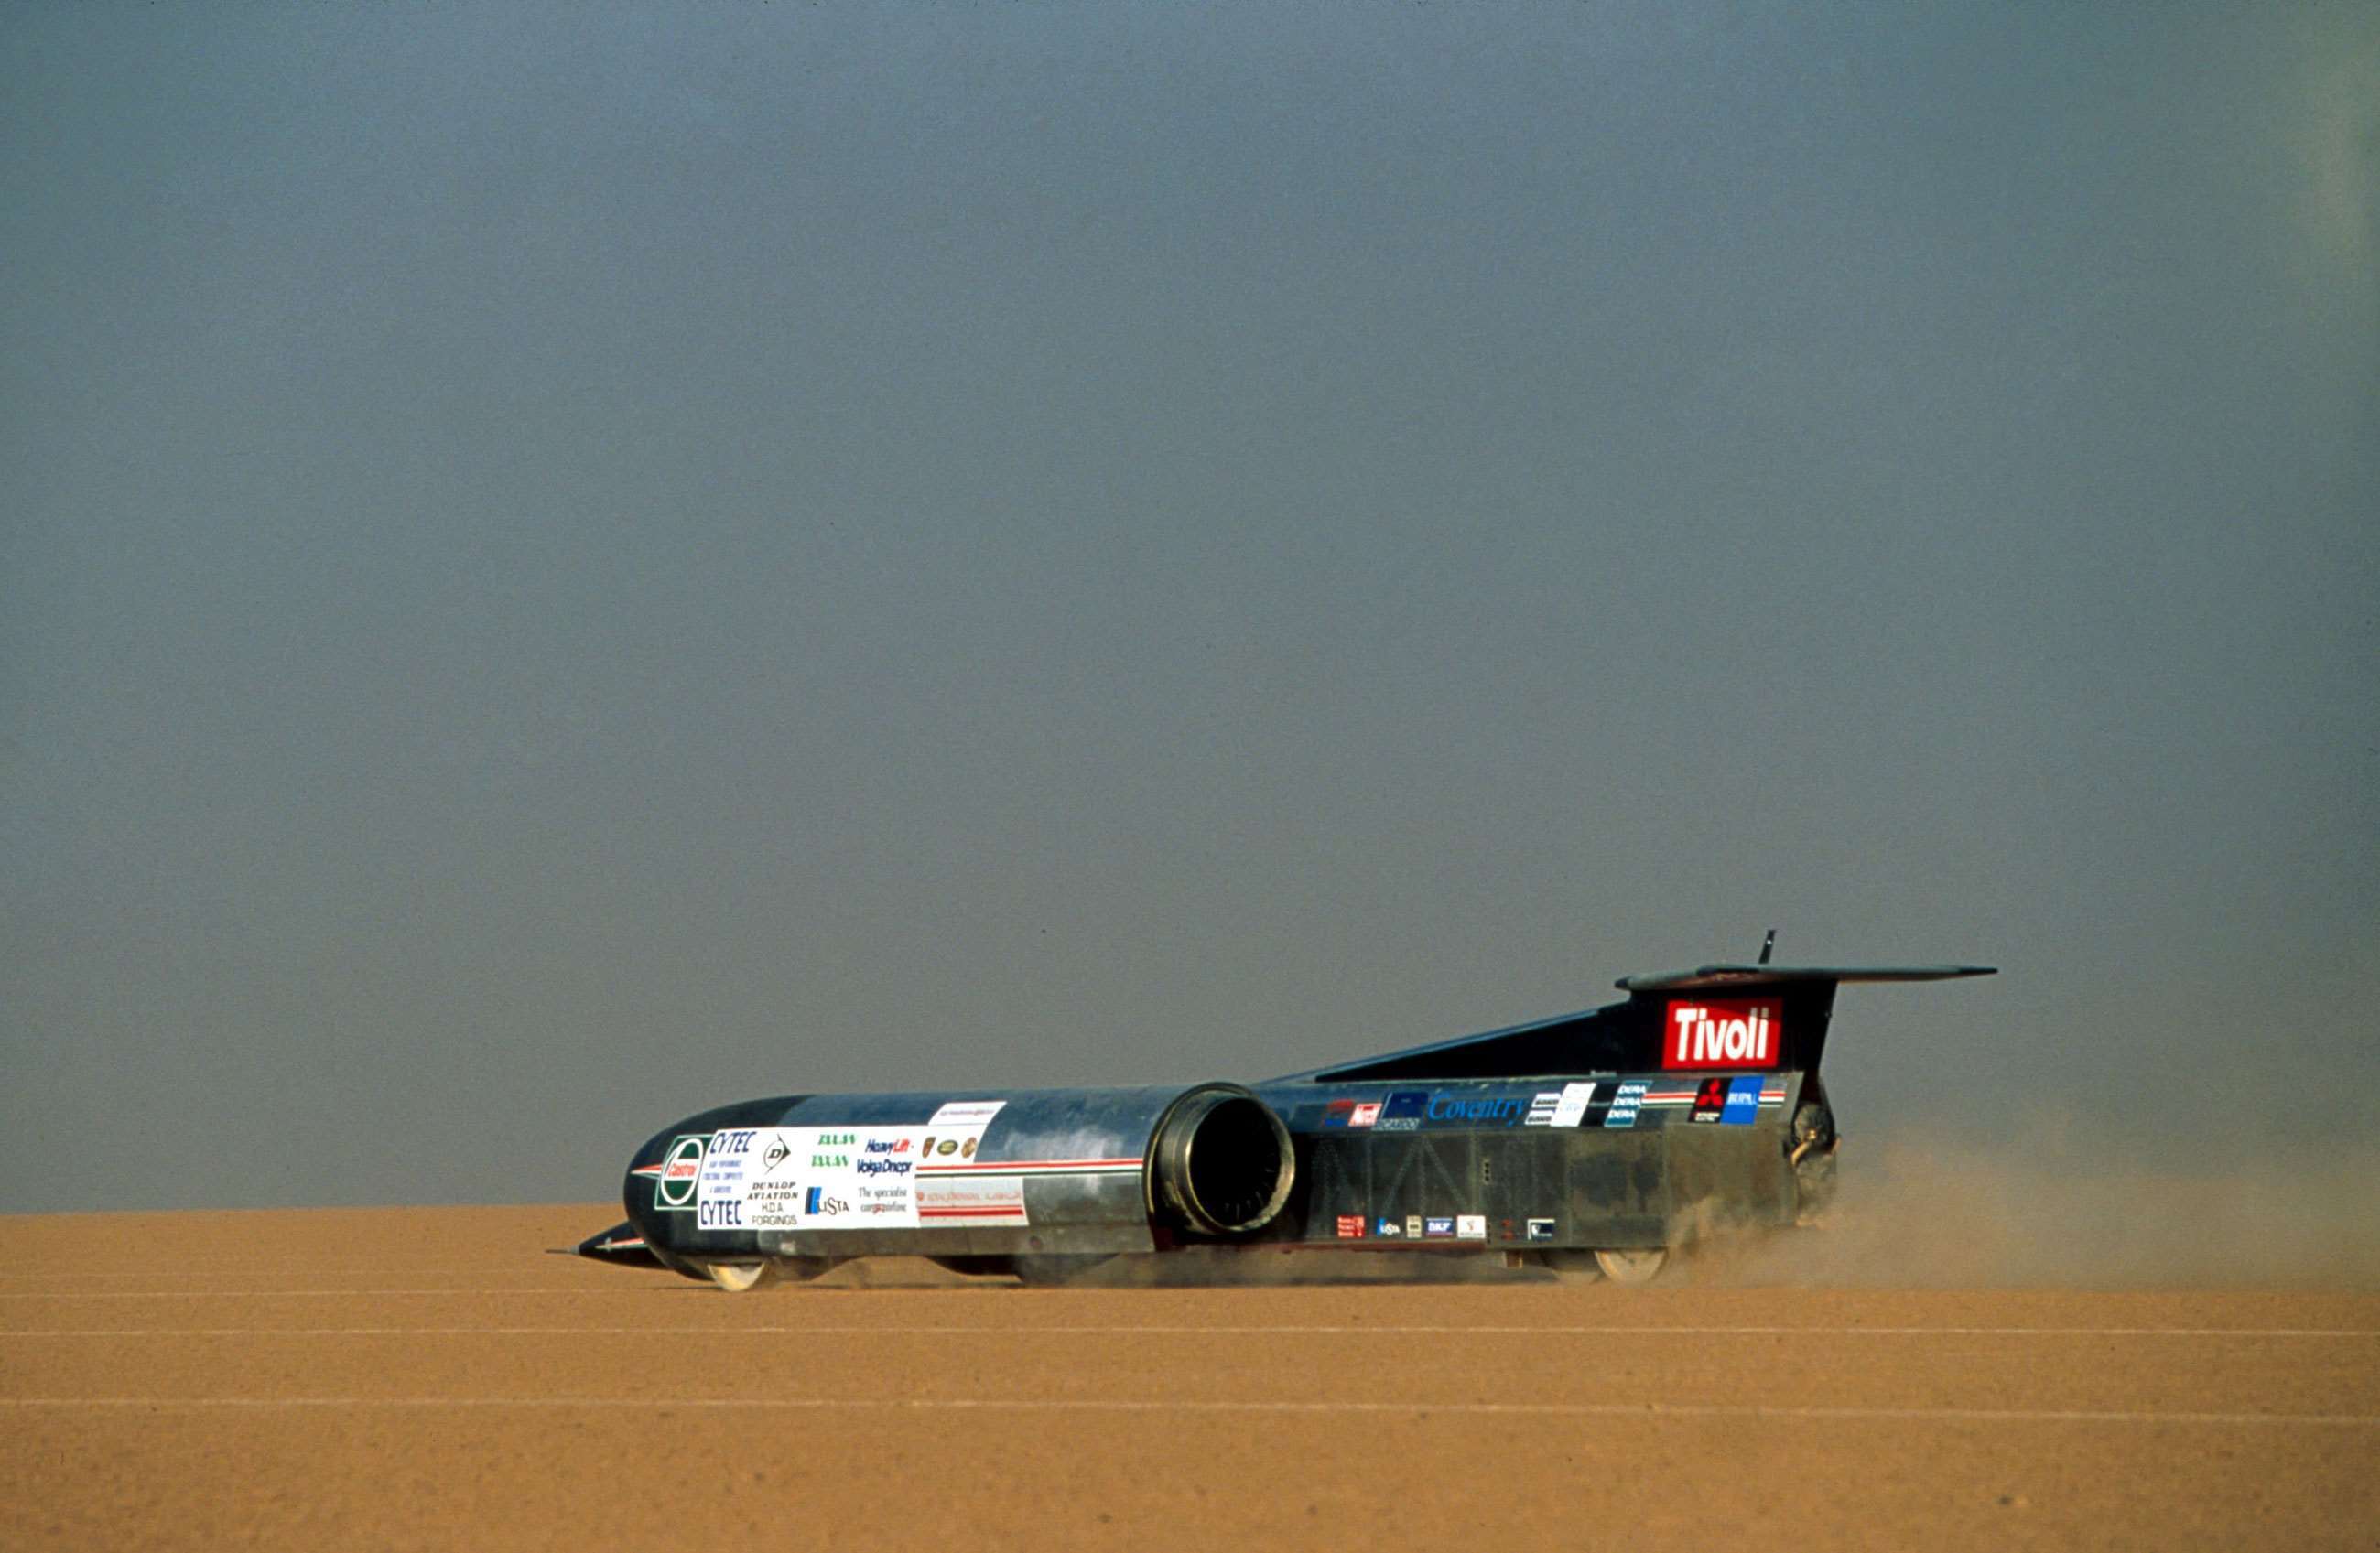 coolest-land-speed-record-cars-9-thrust-ssc-al-jafr-testing-1996-sutton-mi-goodwood-22042021.jpg